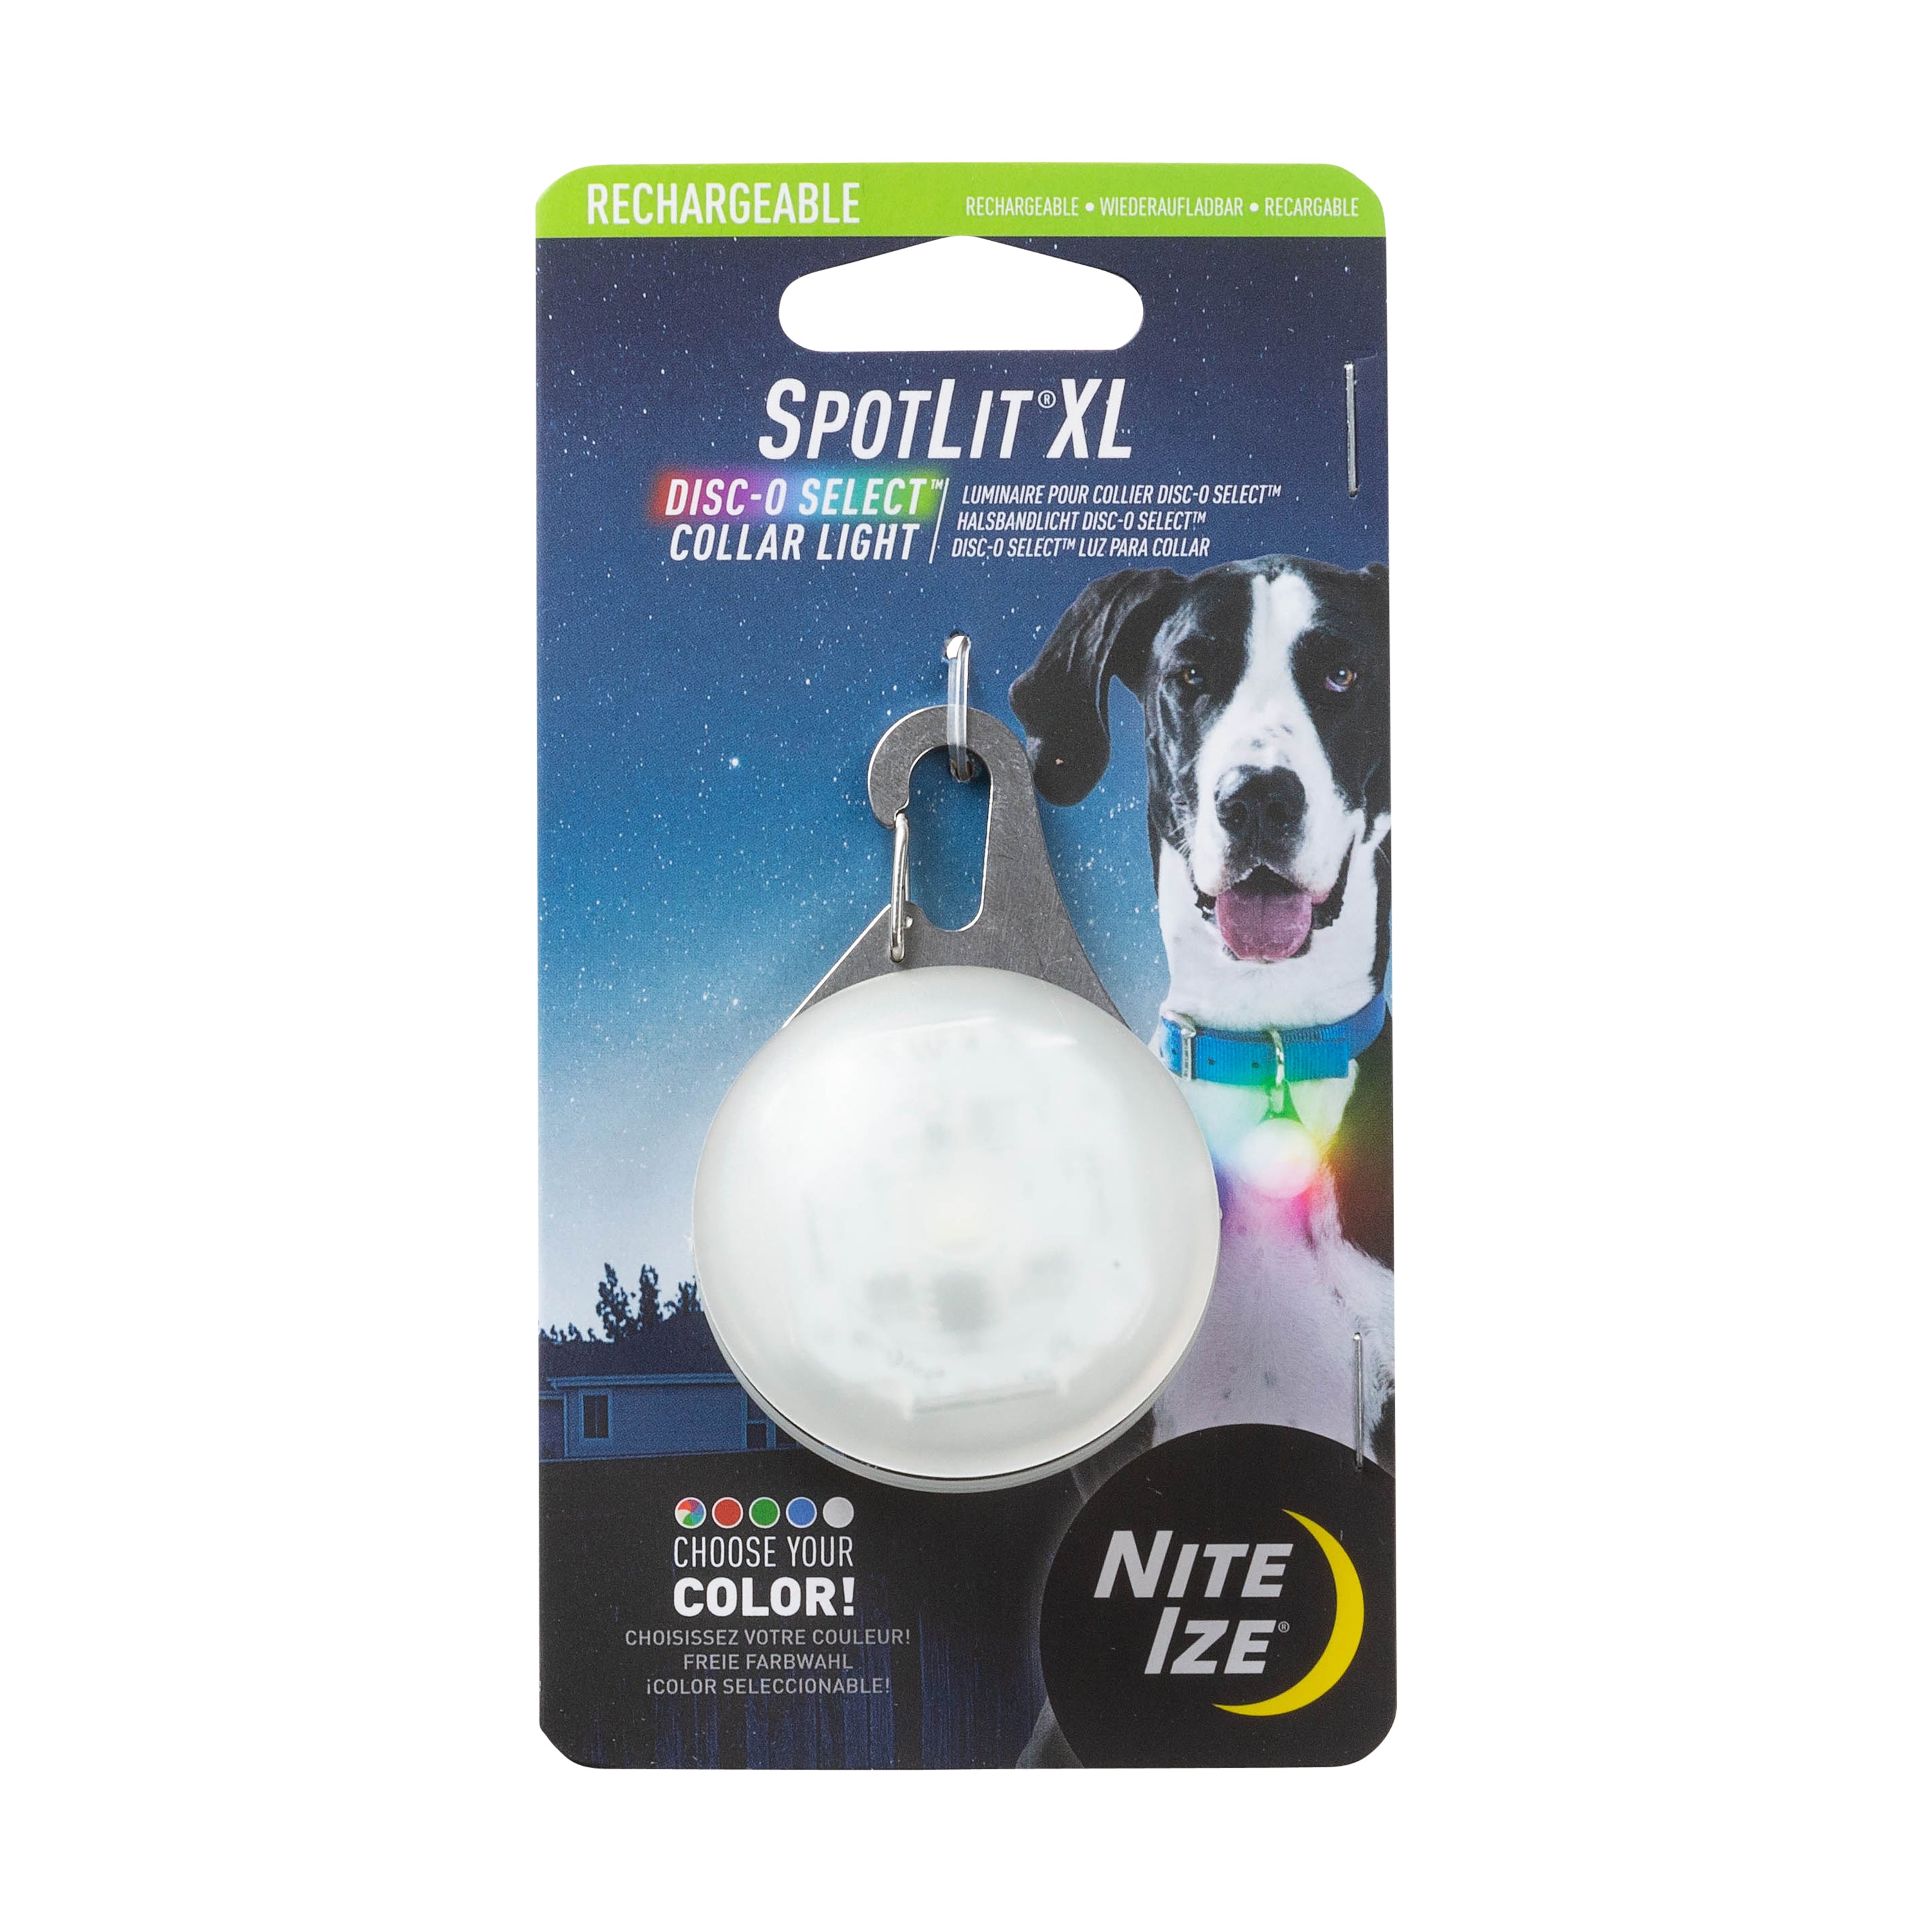 SpotLit Rechargeable Collar Light